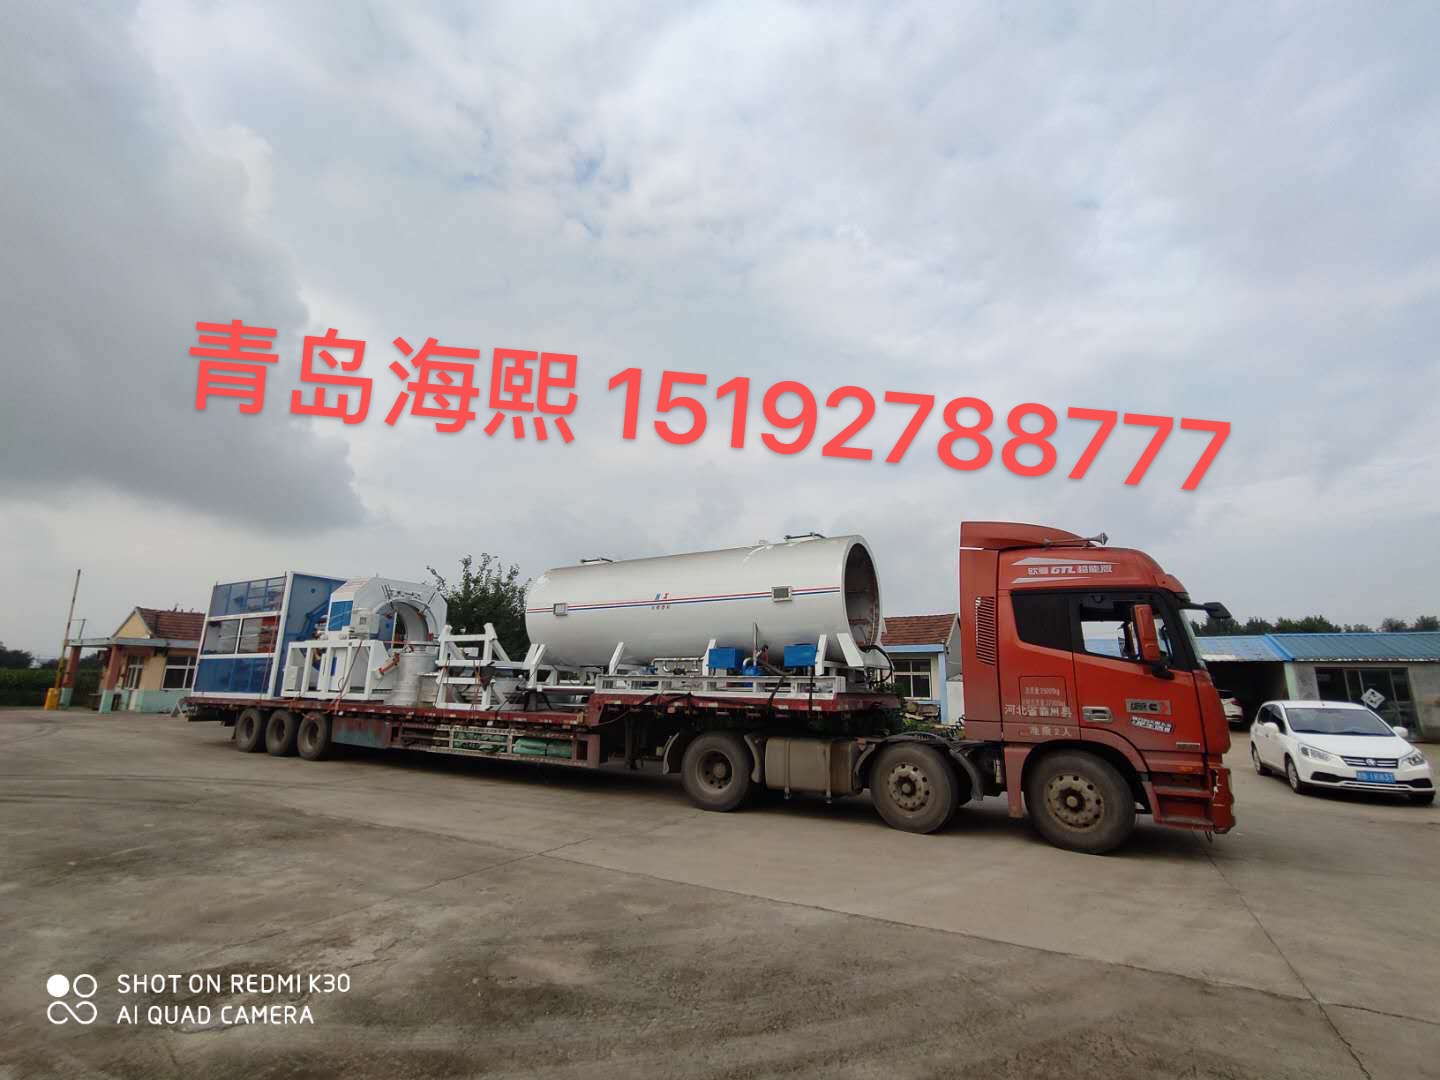 Hebei Haoshun pipeline equipment manufacturing Co., Ltd